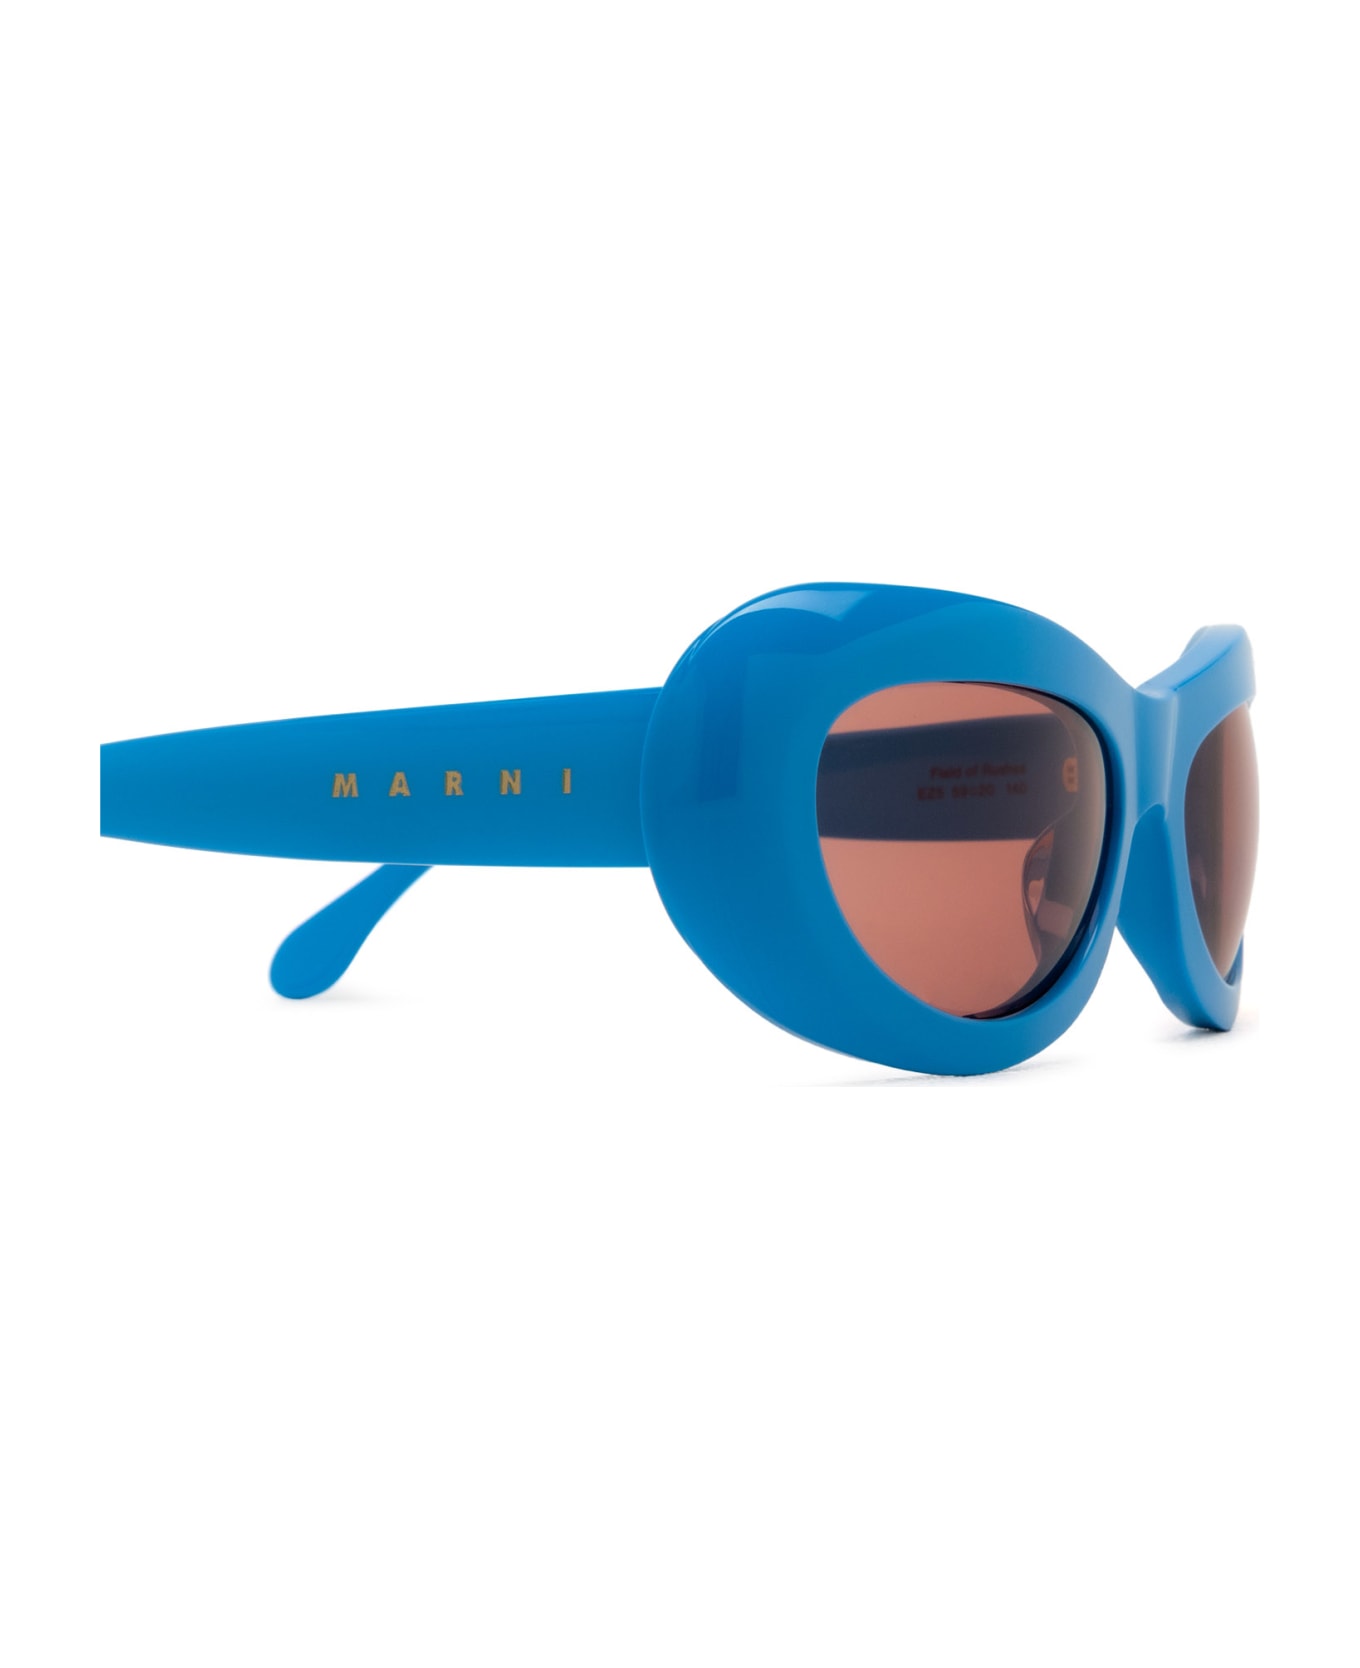 Marni Eyewear Field Of Rushes Blue Sunglasses - Blue サングラス